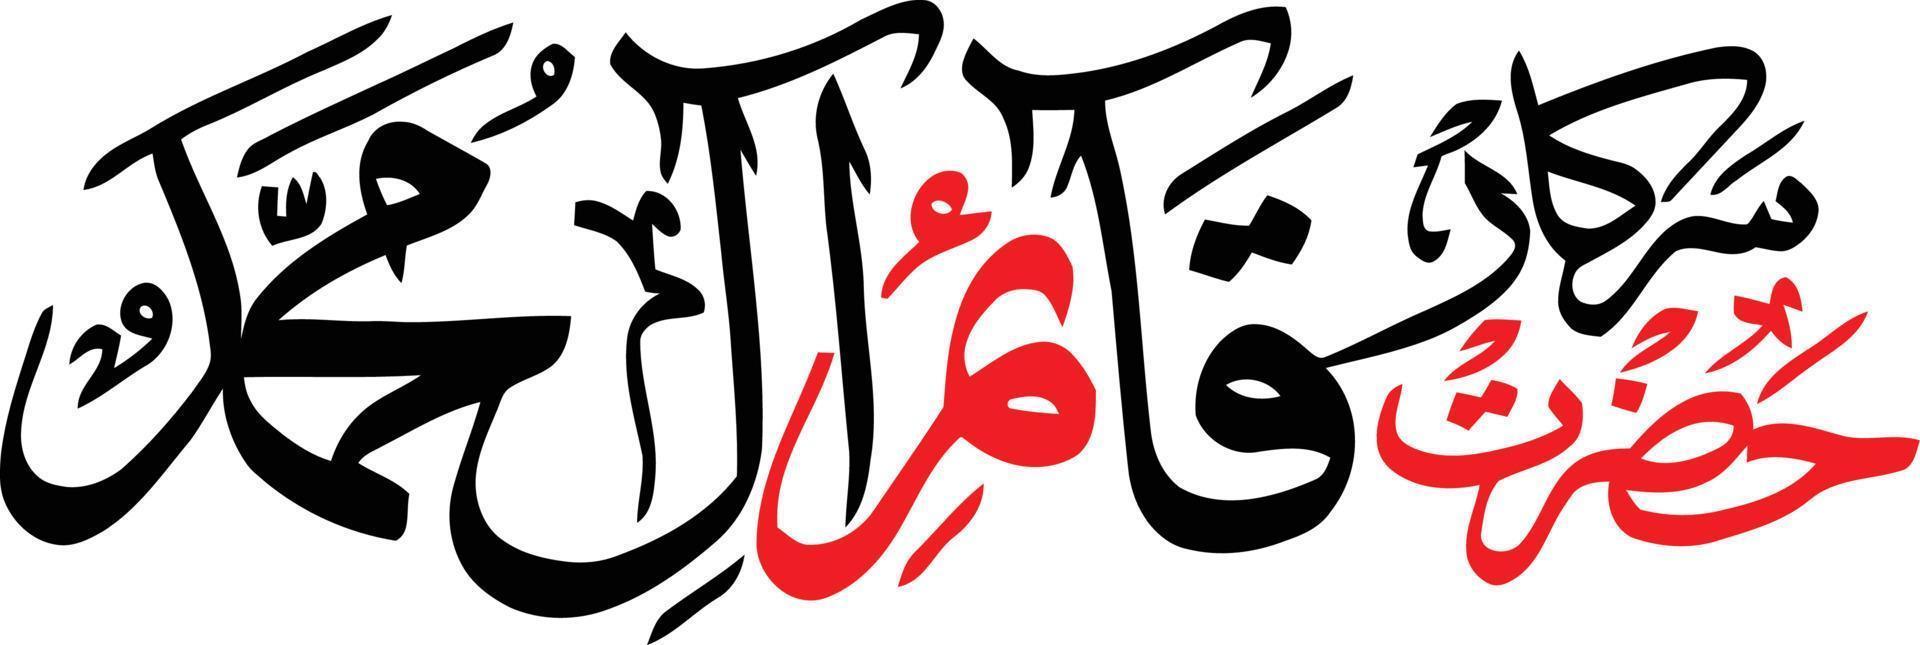 hazrat sirkar qaeym al muhammad caligrafía islámica vector libre